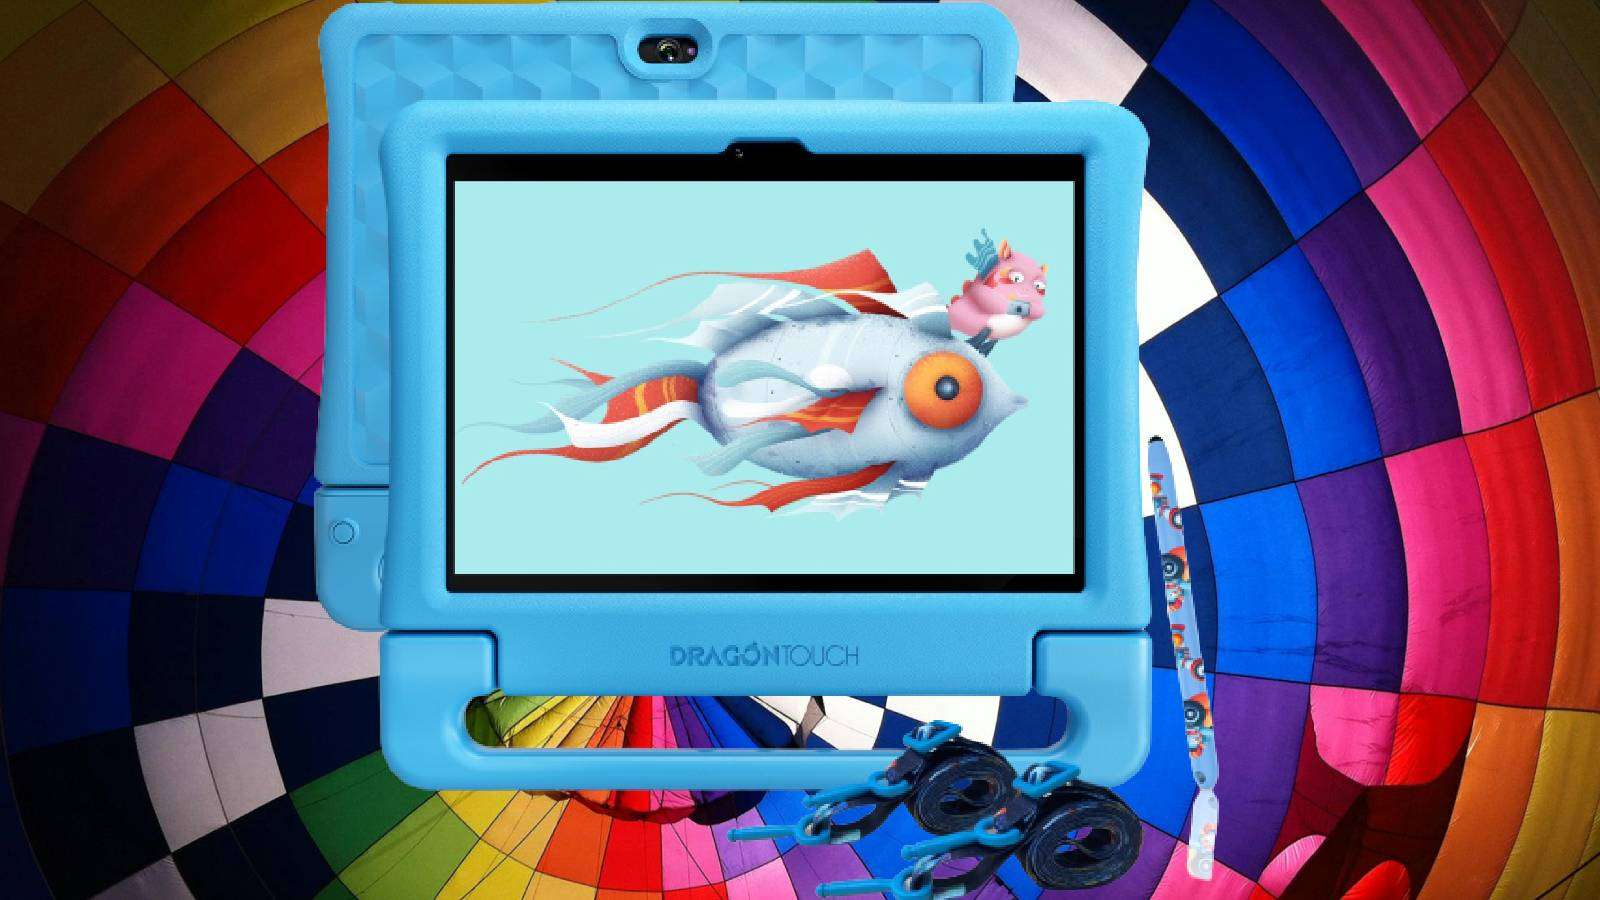 Dragon Touch children's tablet